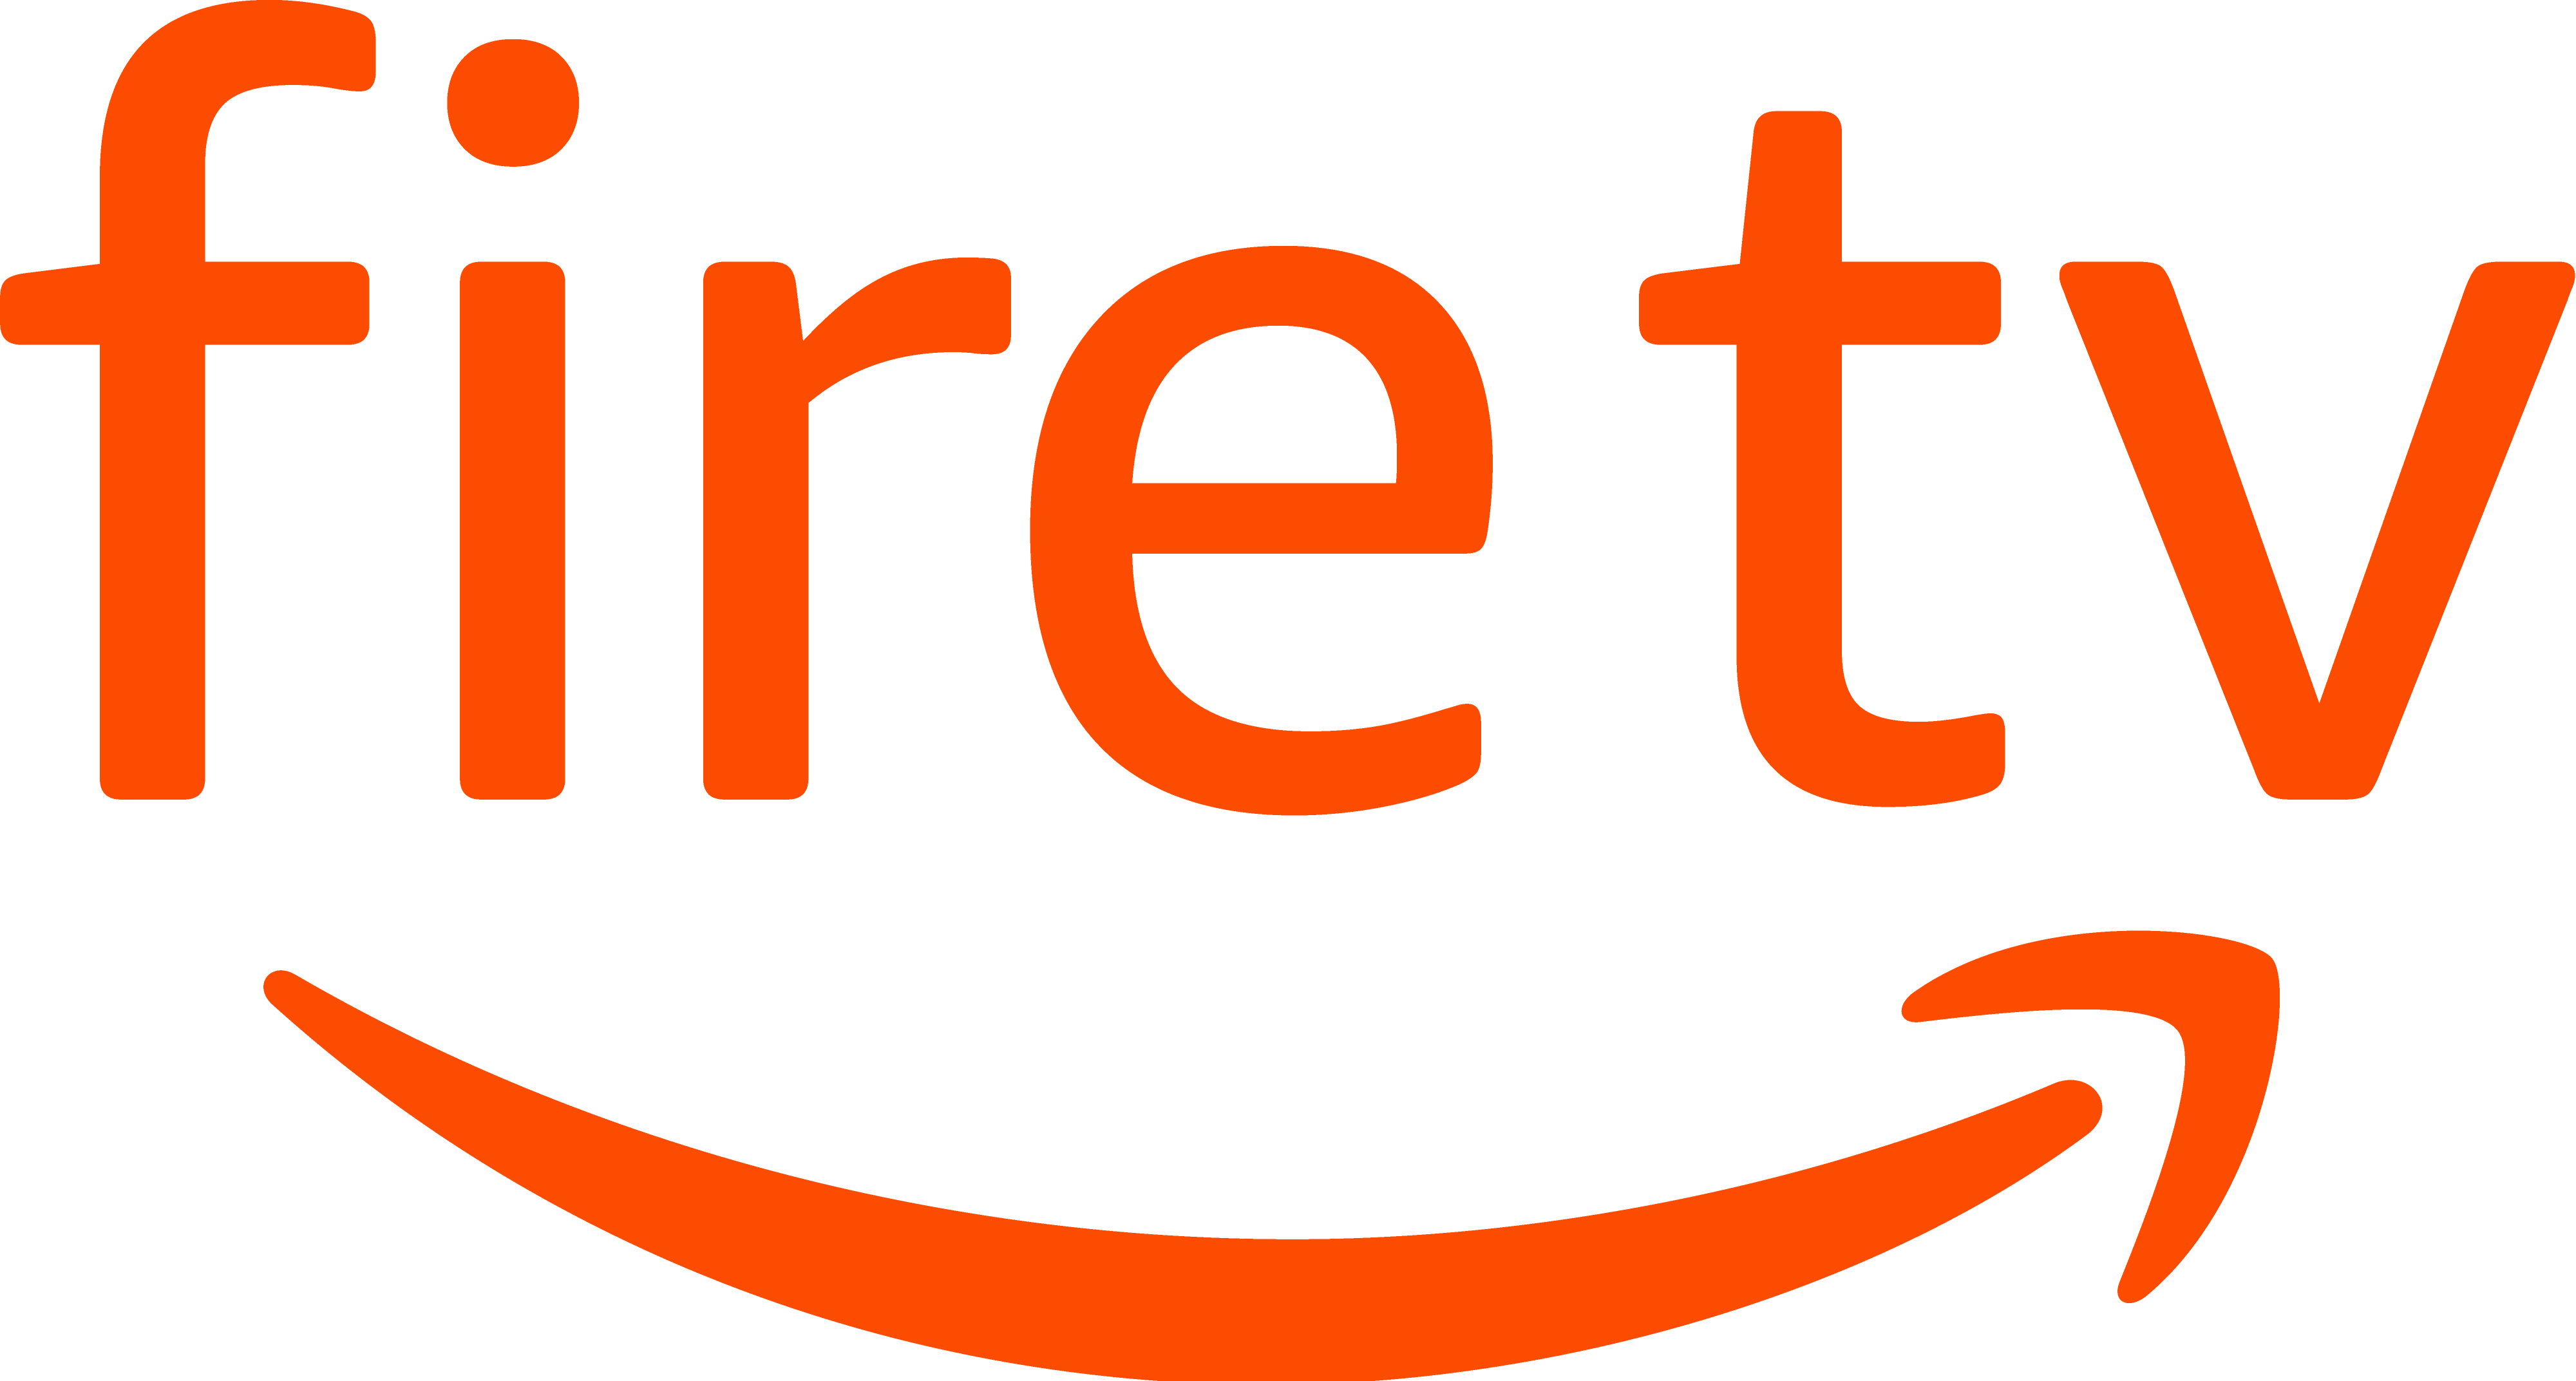 TV Orange Logo - Images and videos | Amazon.com, Inc. - Press Room